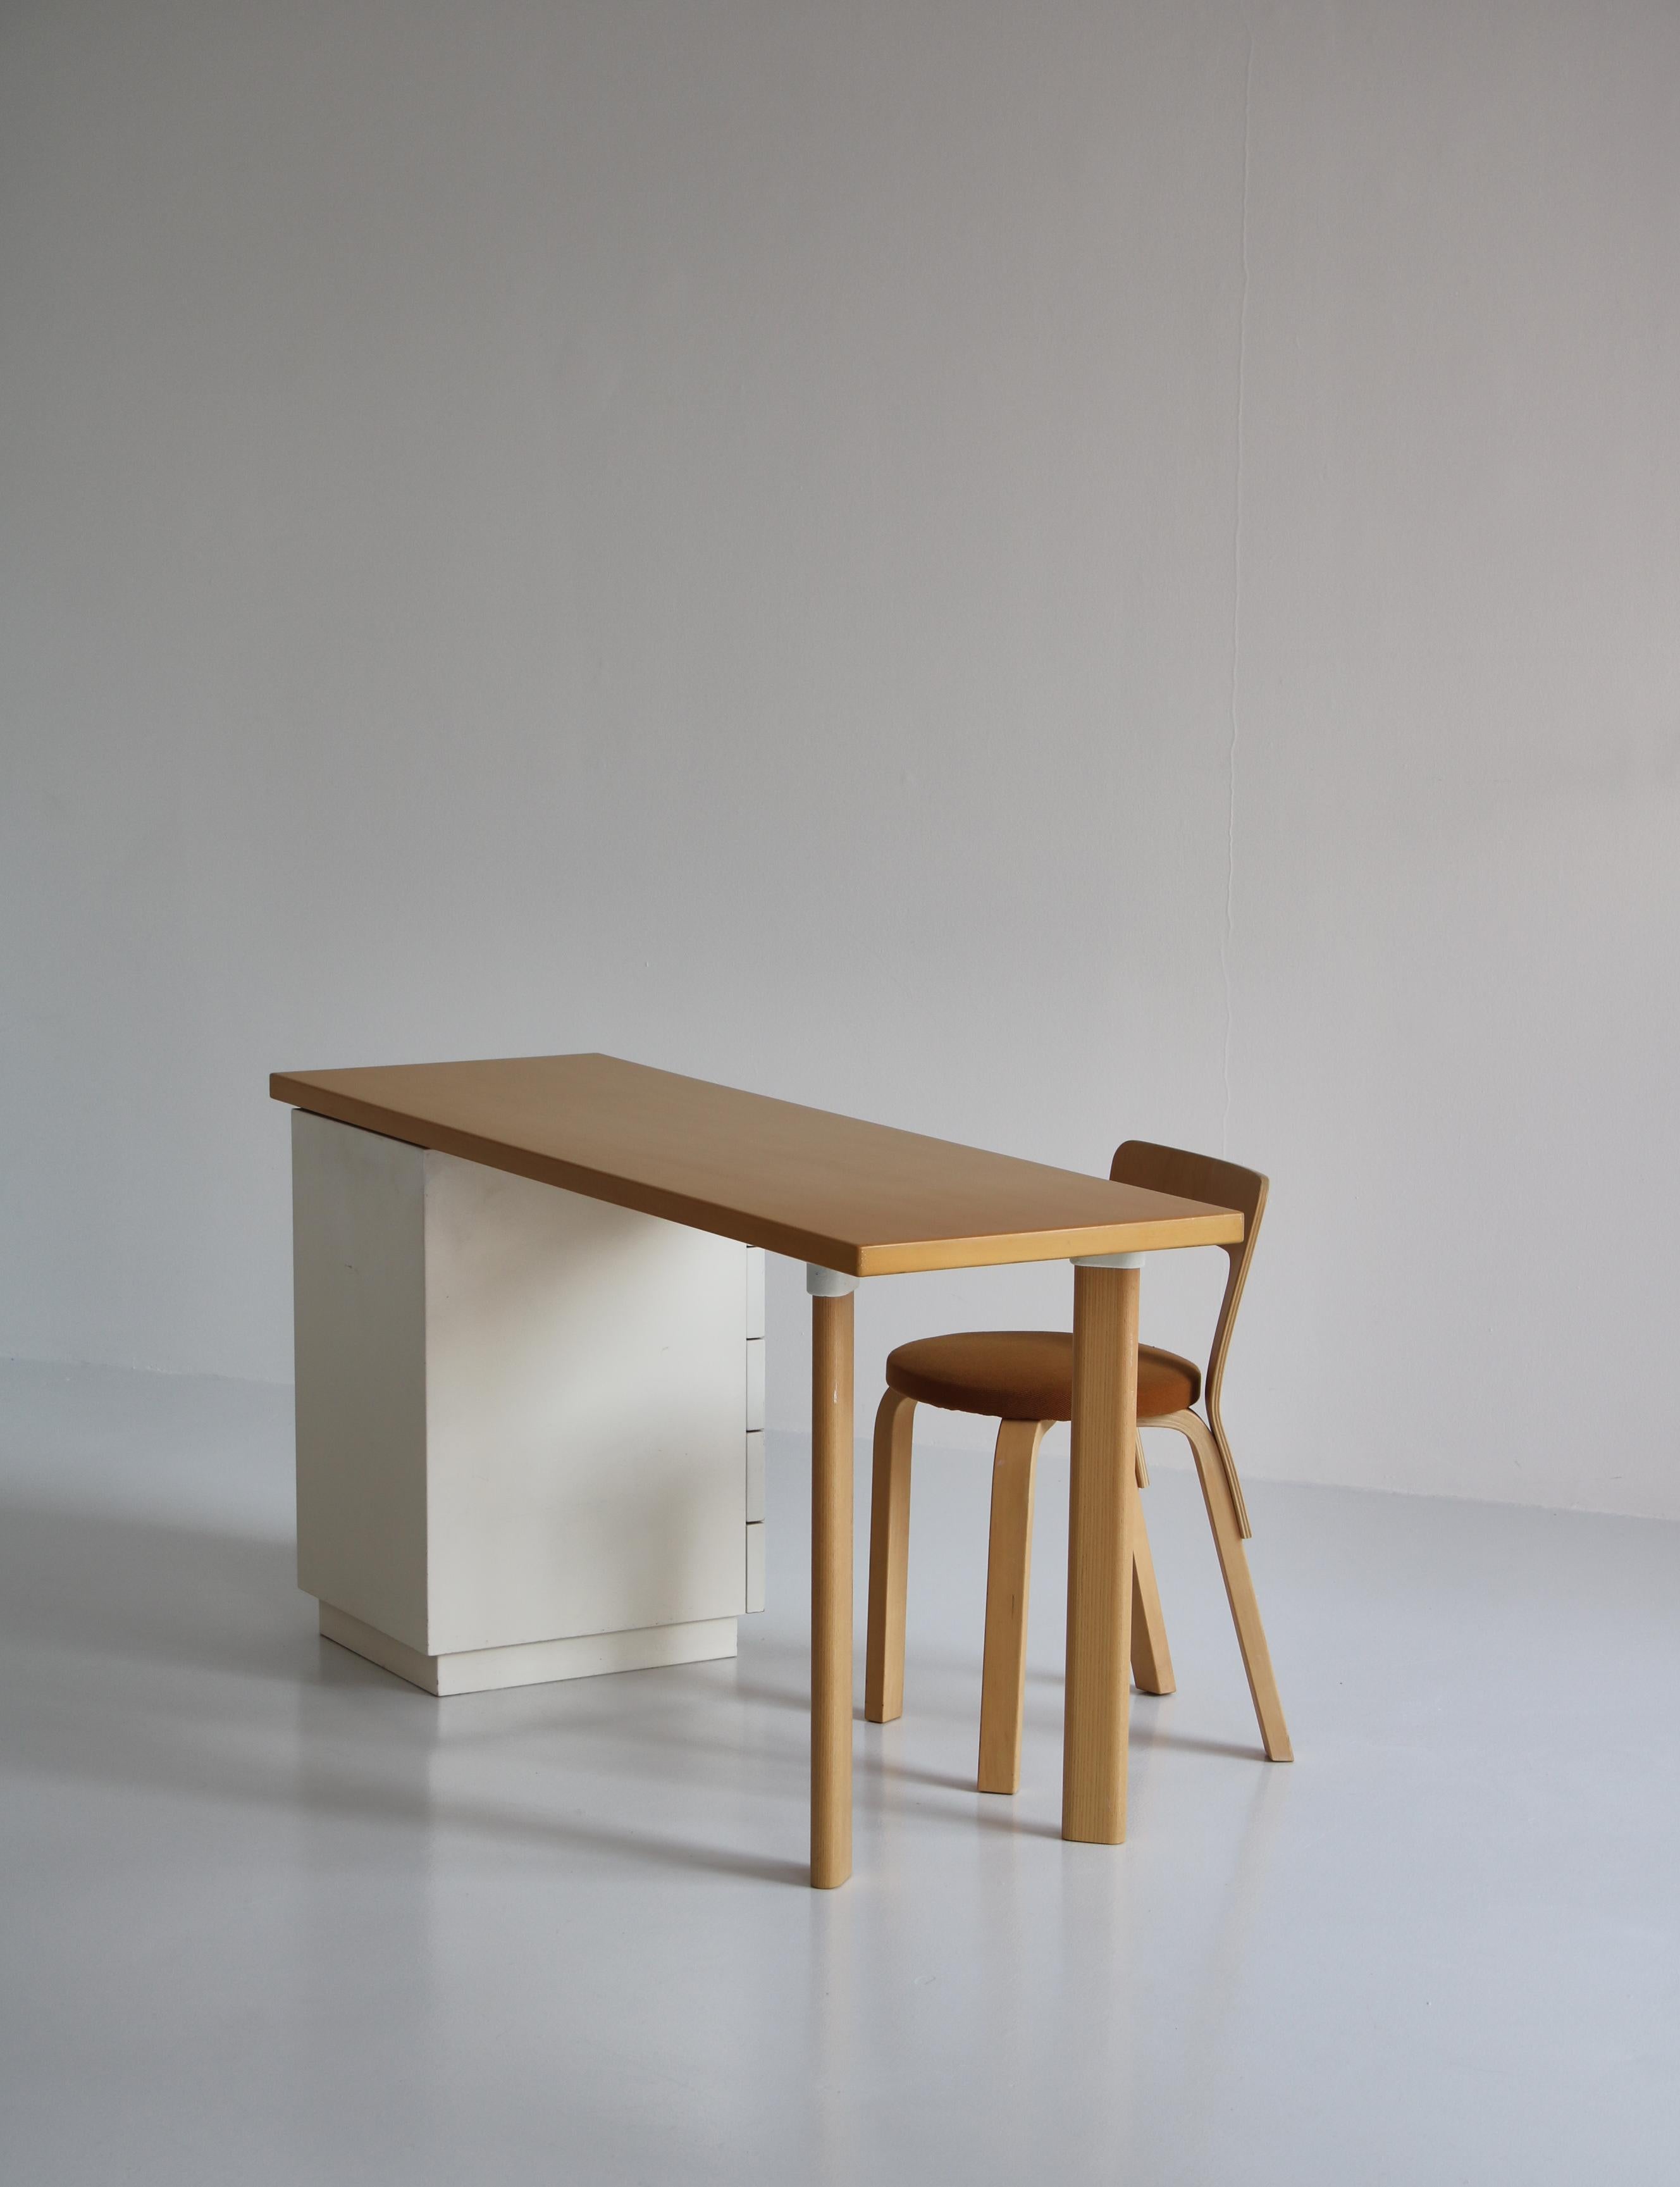 Scandinavian Modern Alvar Aalto Desk and Chair Model 65, made by Artek, Finland in the 1960s